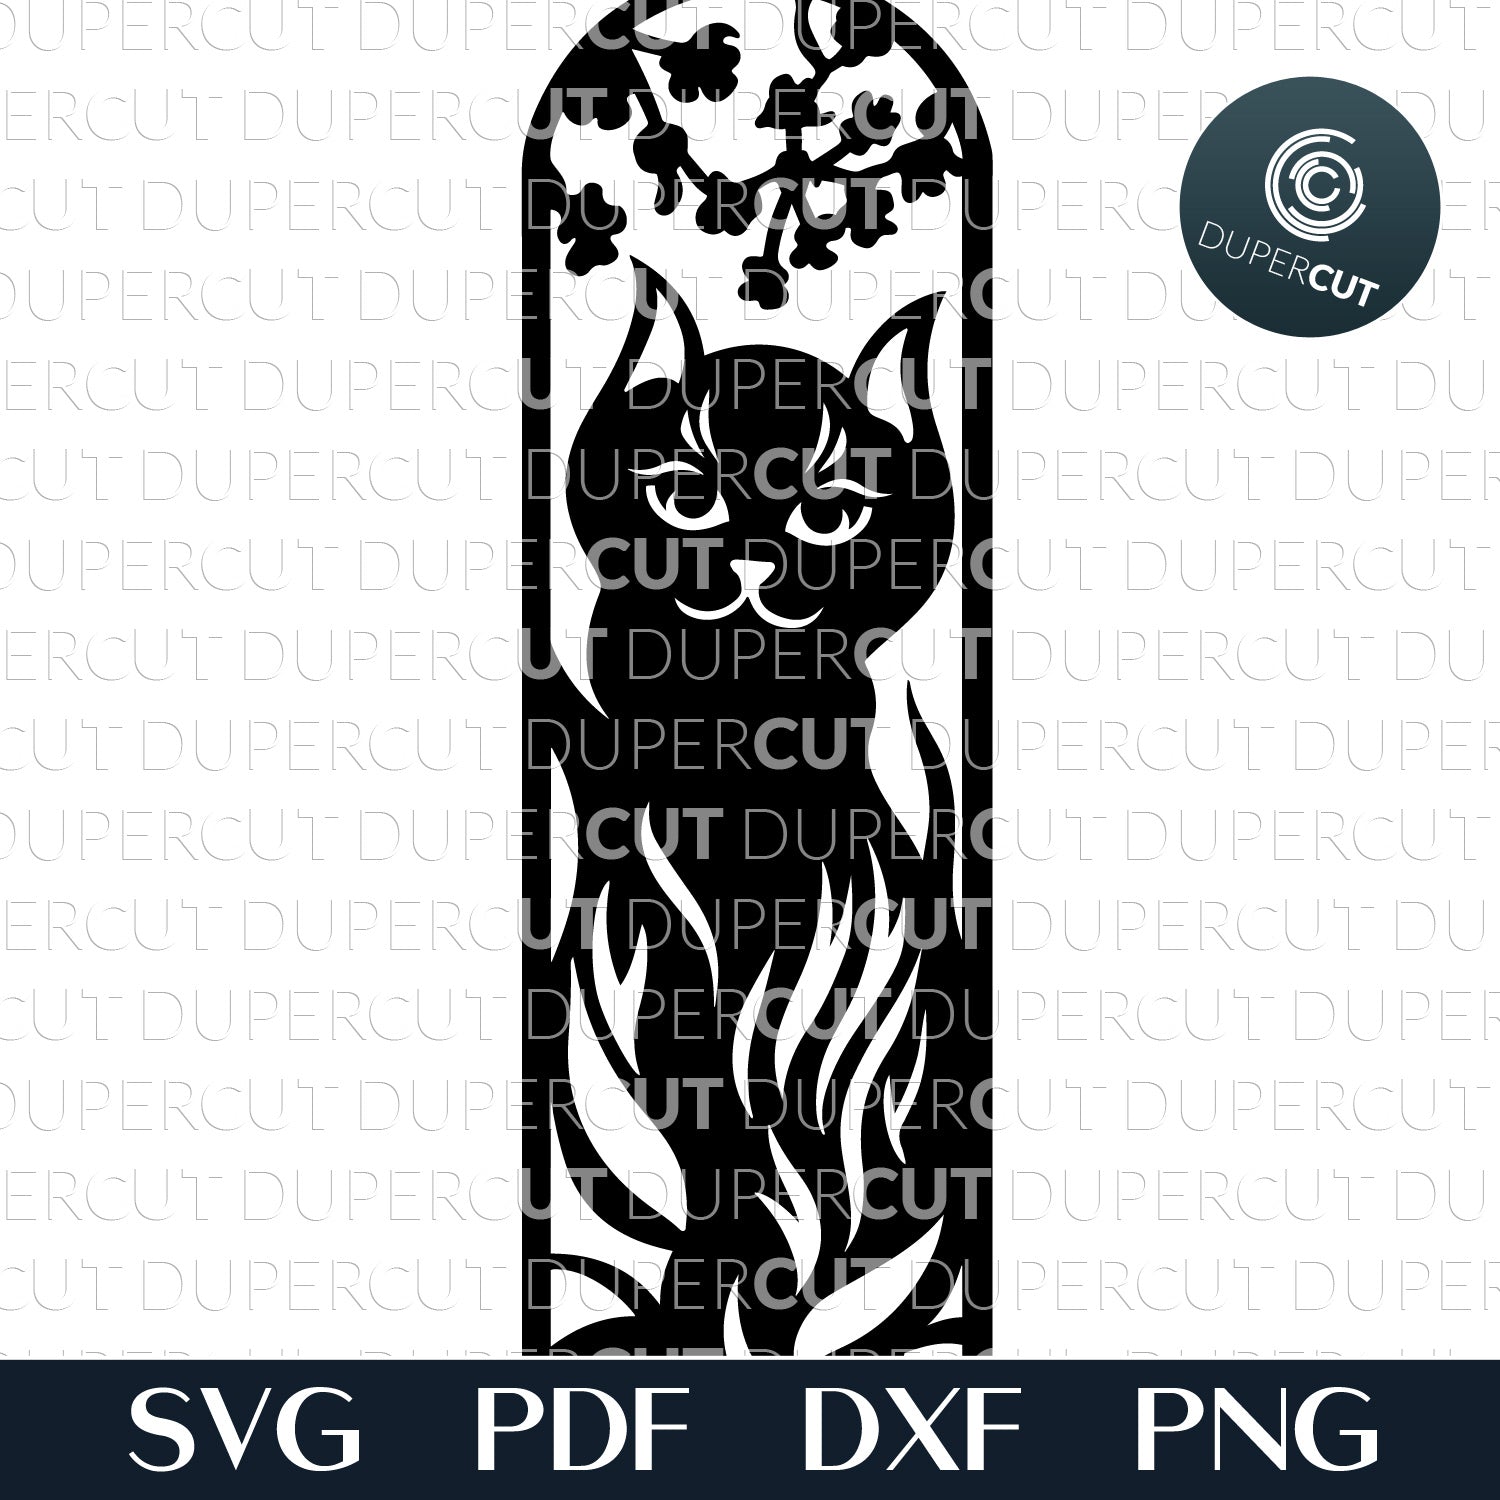 DIY black cat detailed bookmark - SVG DXF vector files for laser cutting machines, Glowforge, Cricut, Silhouette, CNC plasma machines by www.DuperCut.com